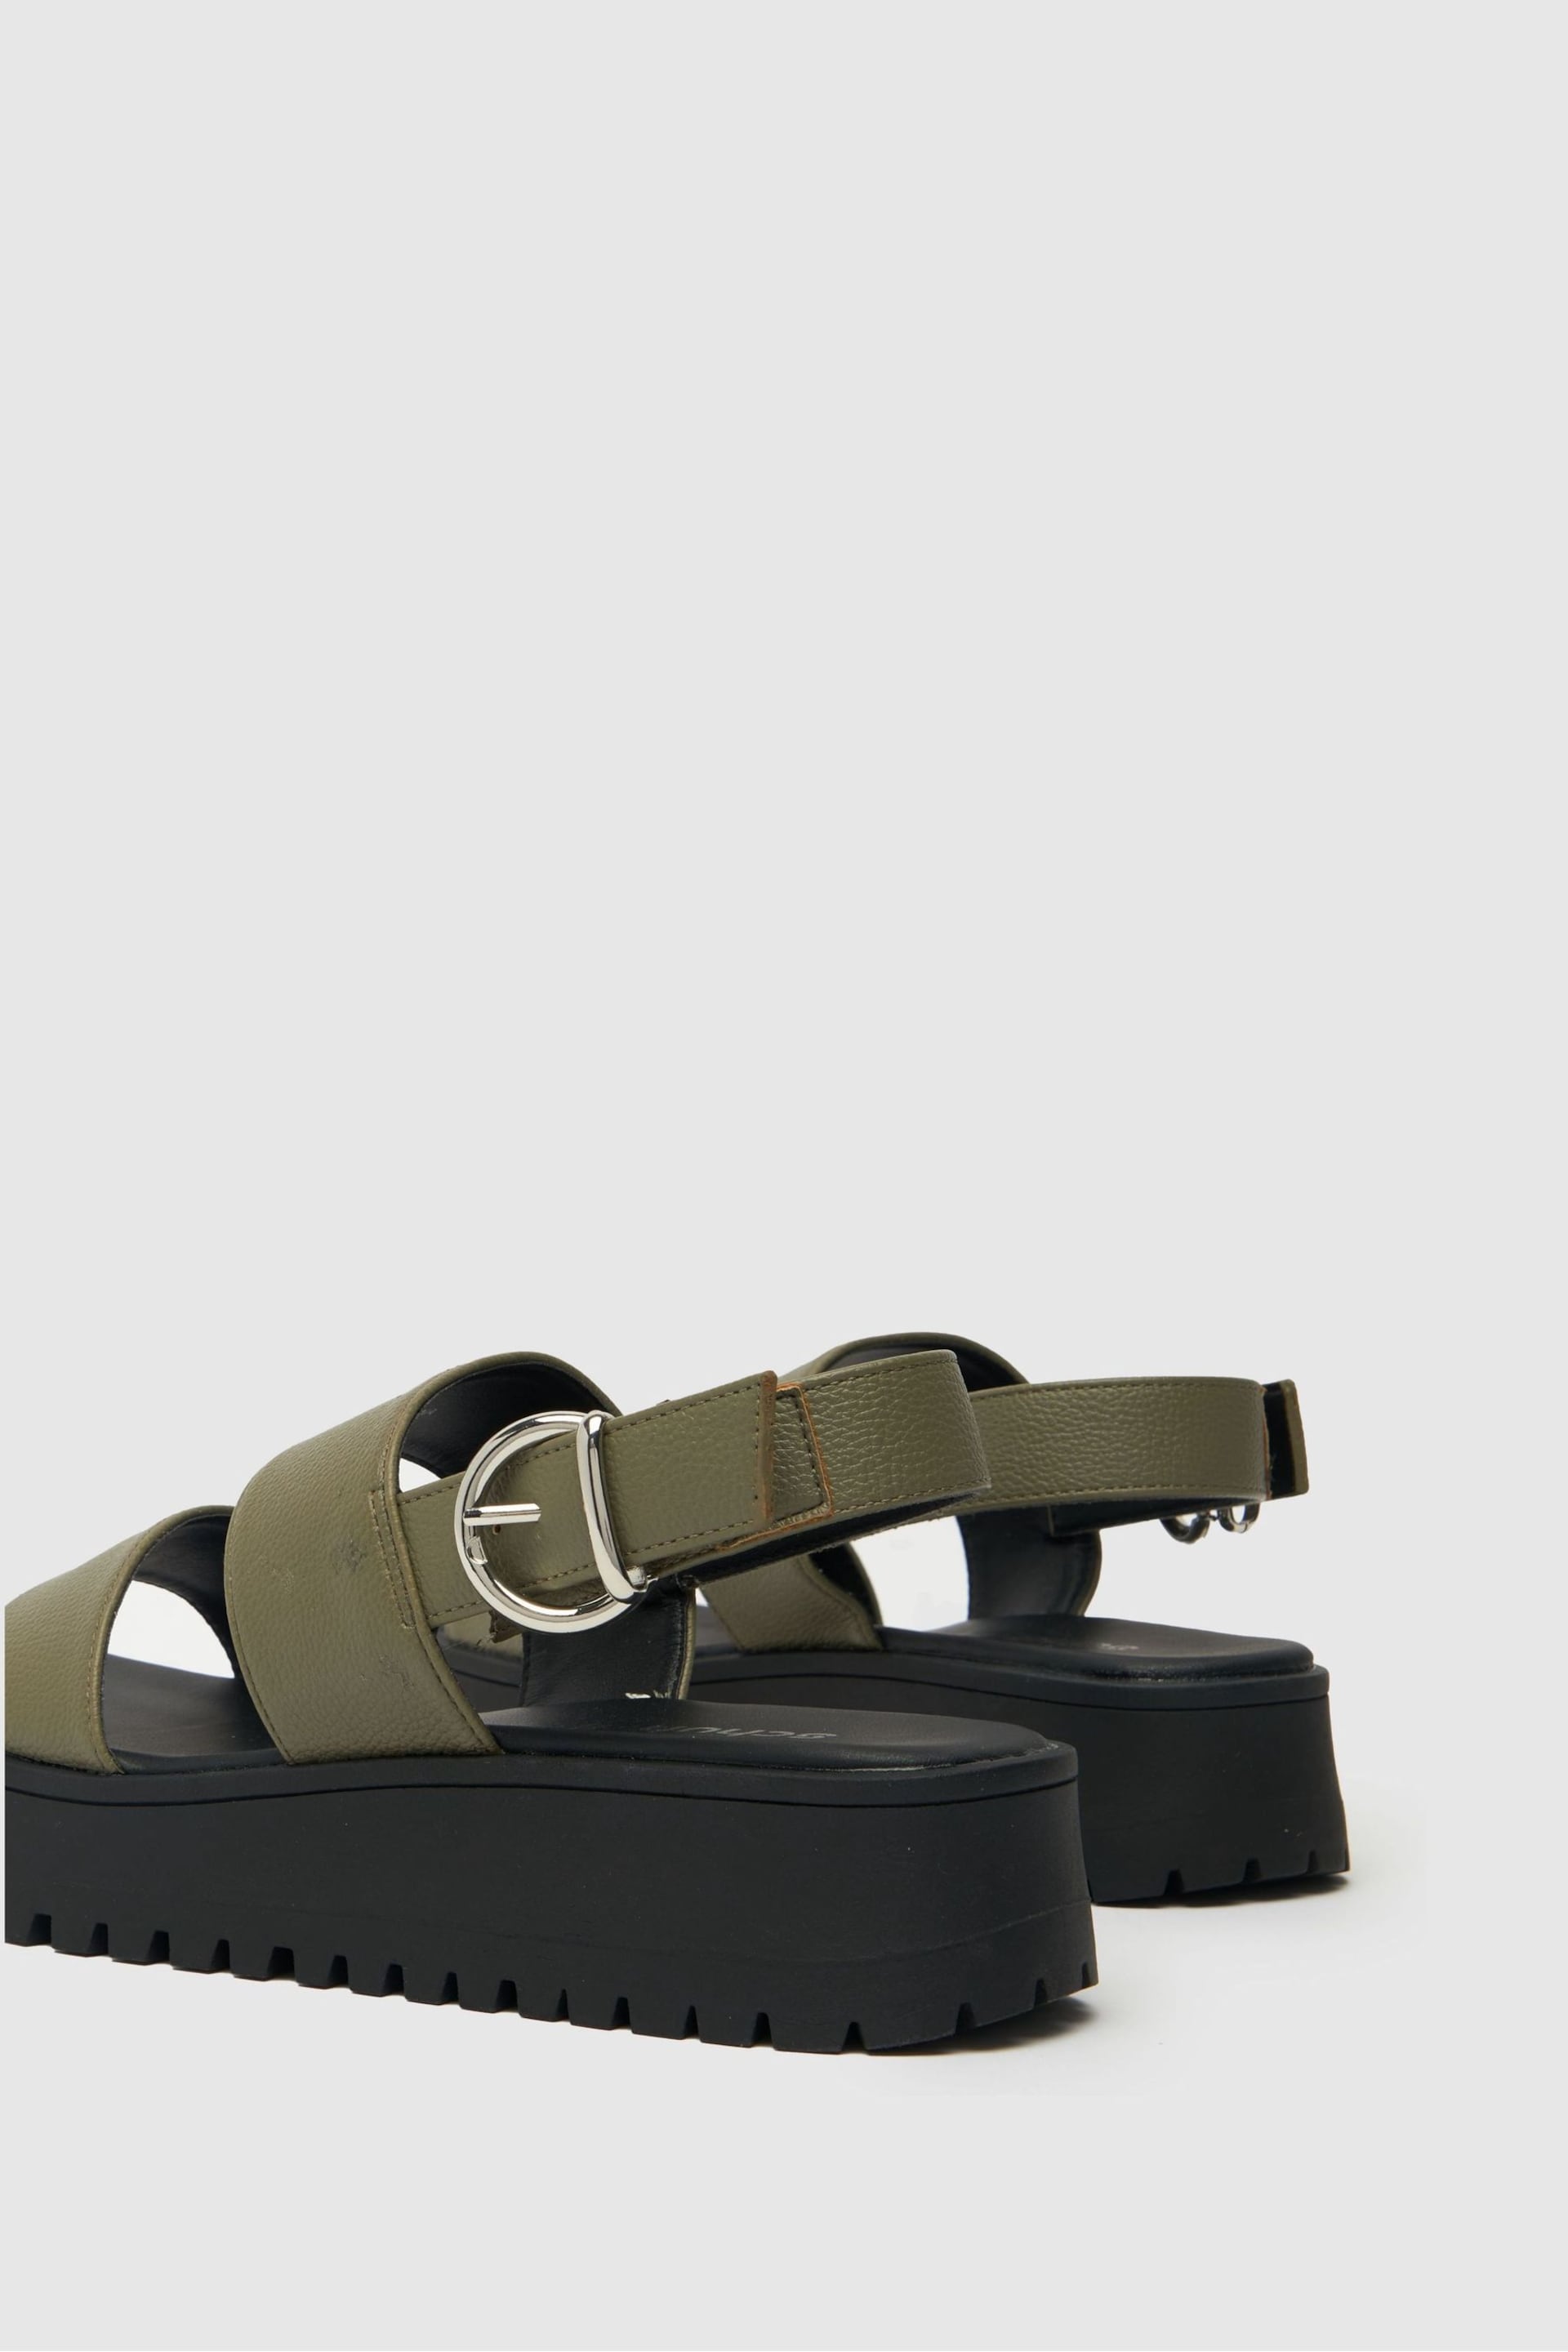 Schuh Tanya Chunky Flatform Sandals - Image 3 of 4